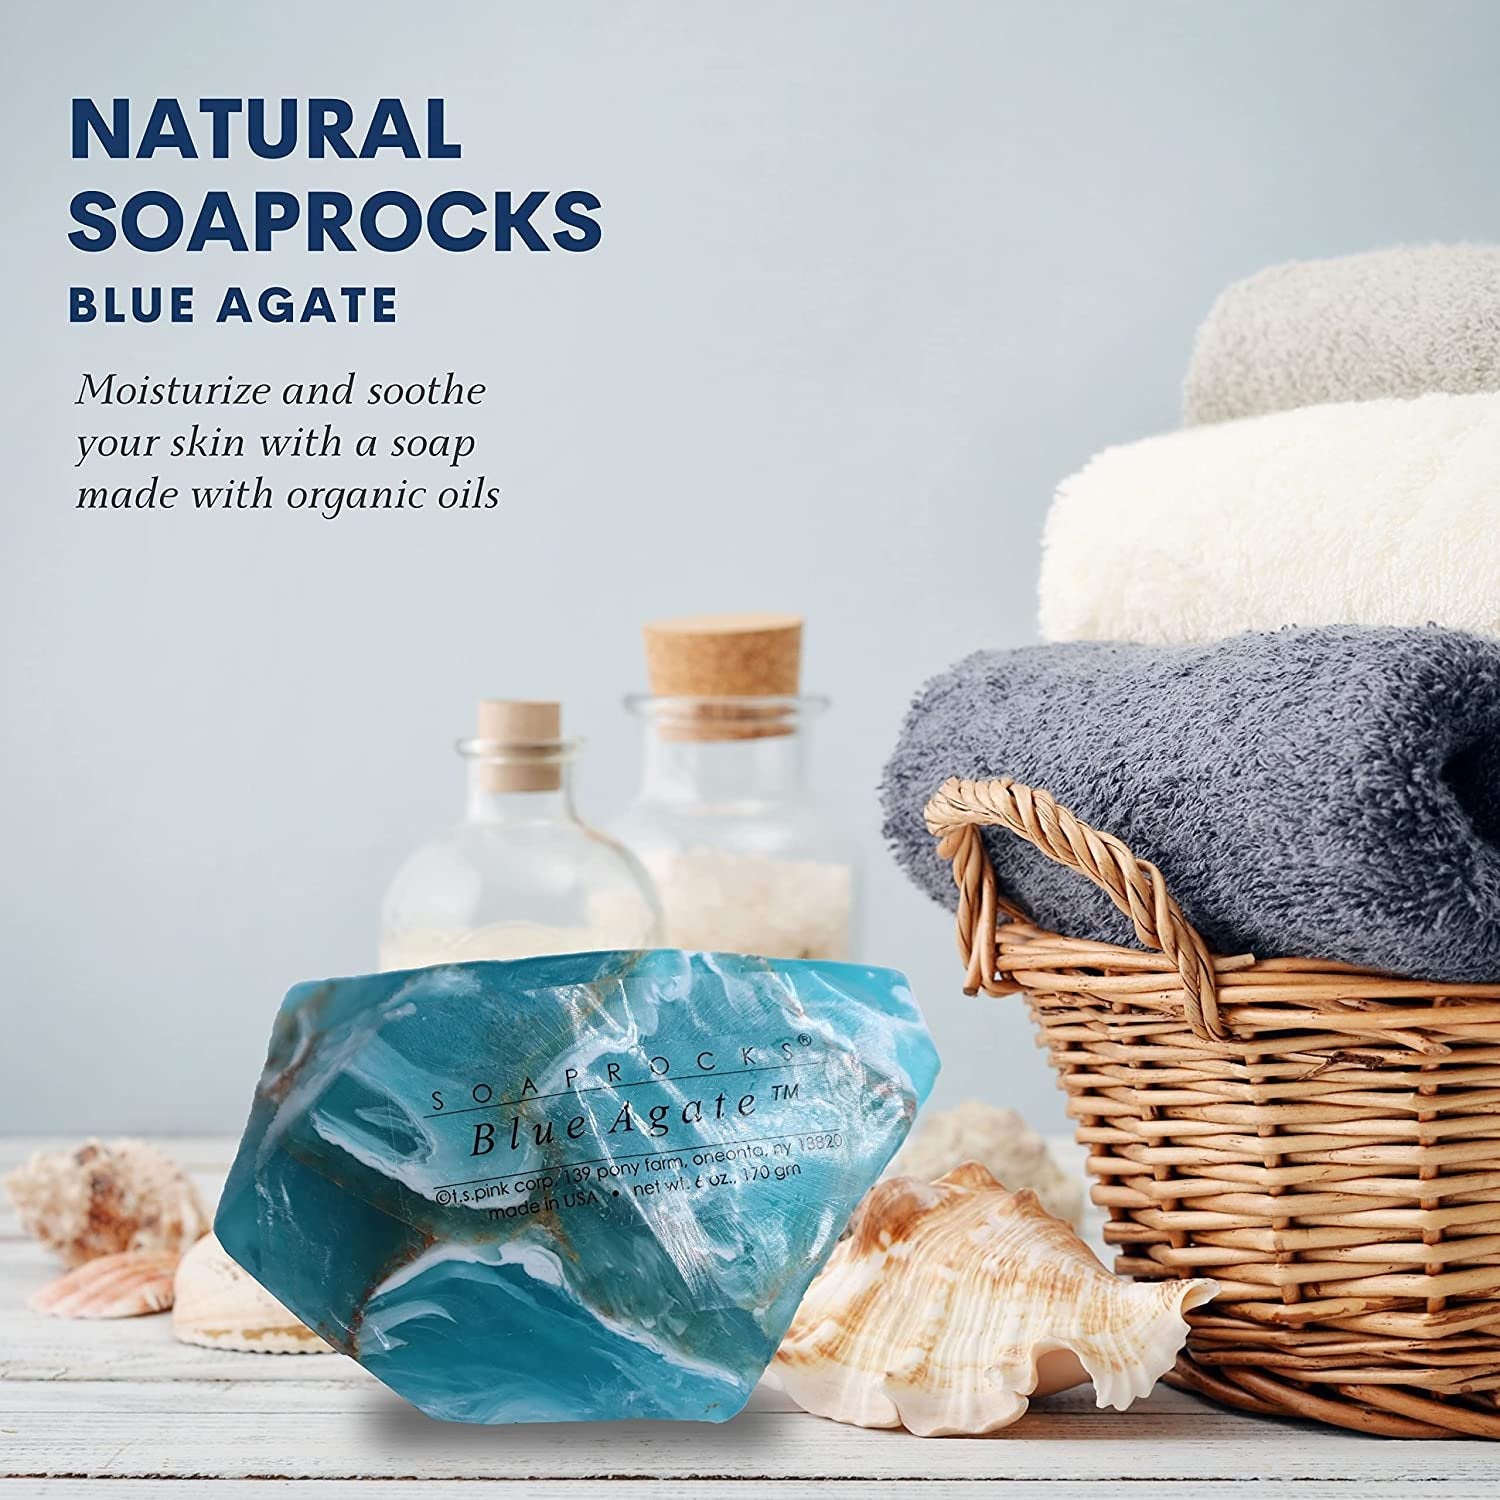 TS Pink Blue Agate SoapRocks - Bar Soap for Bath, Body, Face & Hand so